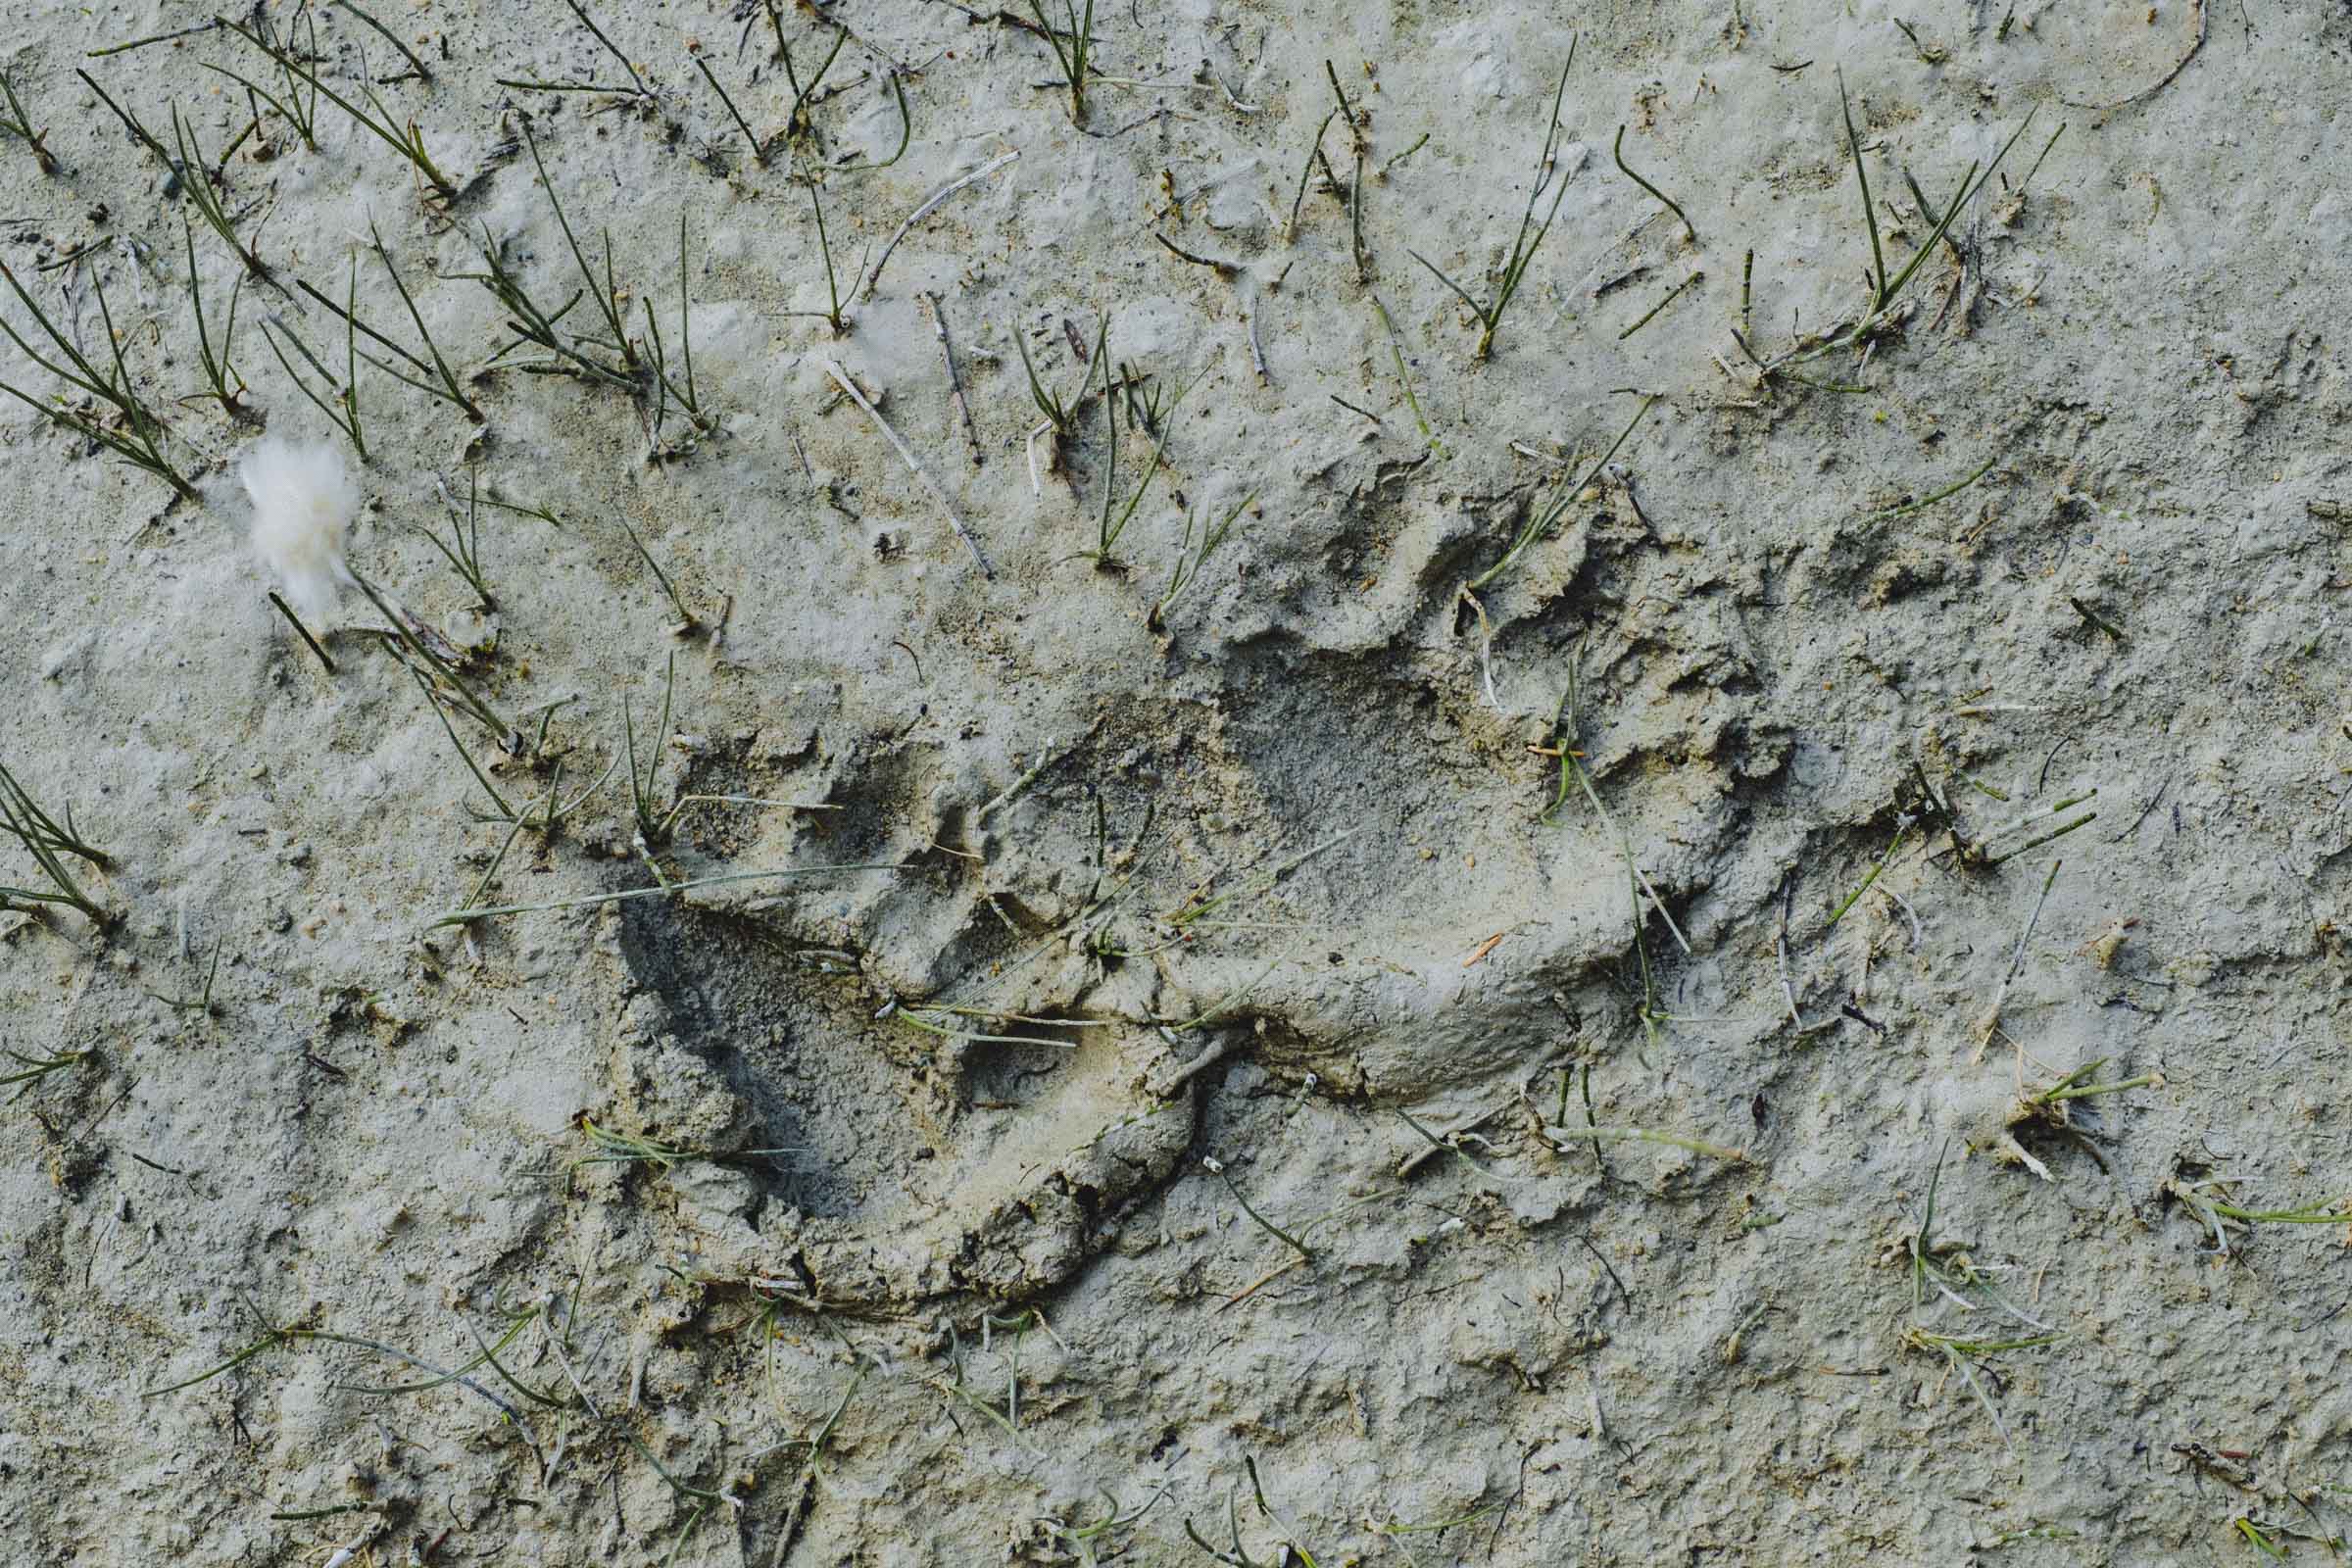 Bear footprints in the lakeshore